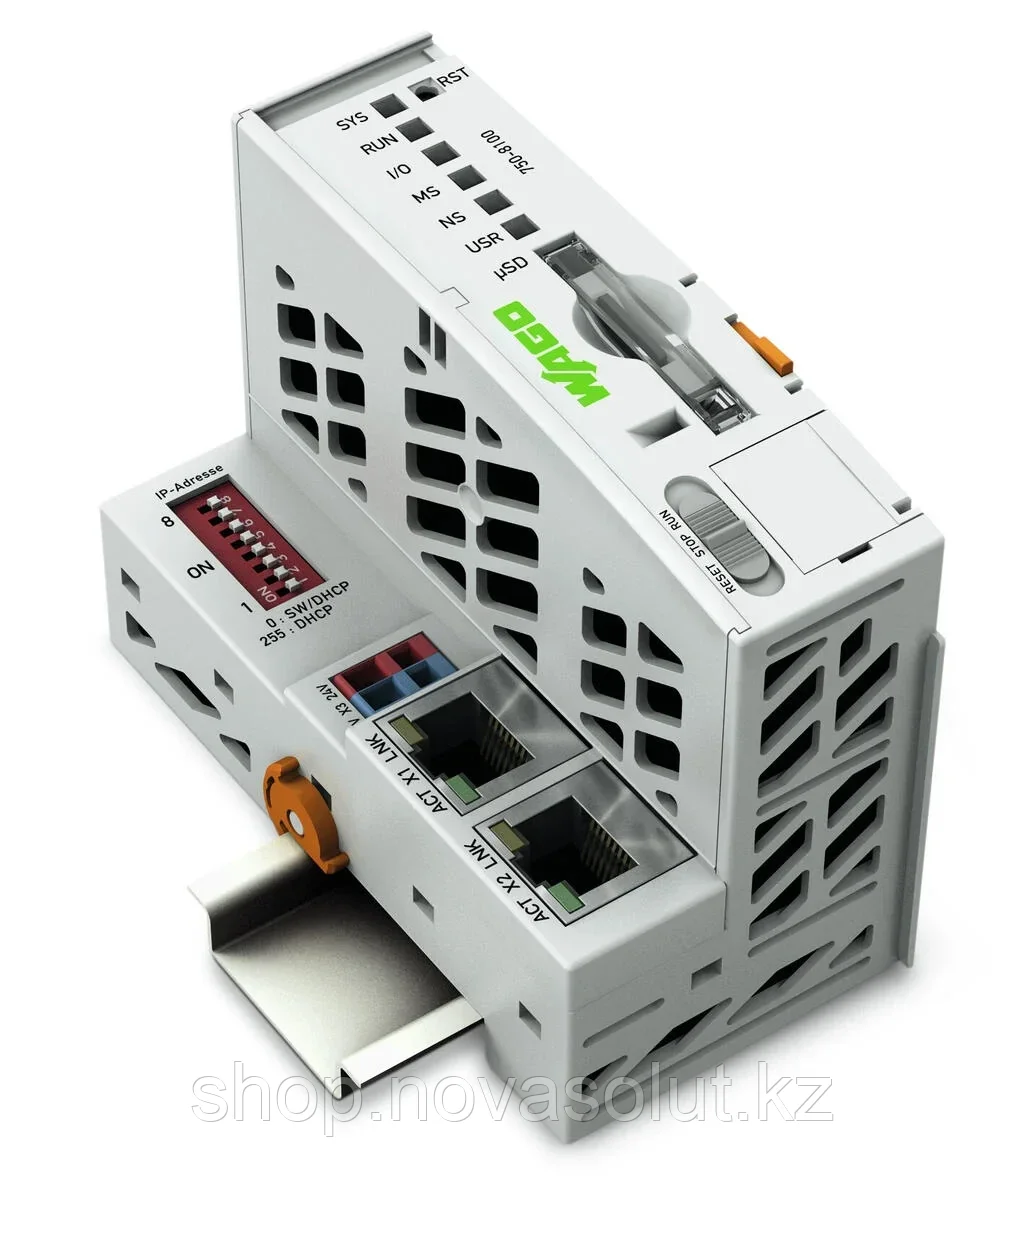 Контроллер PFC100; 2 порта Ethernet; ЭКО WAGO 750-8100